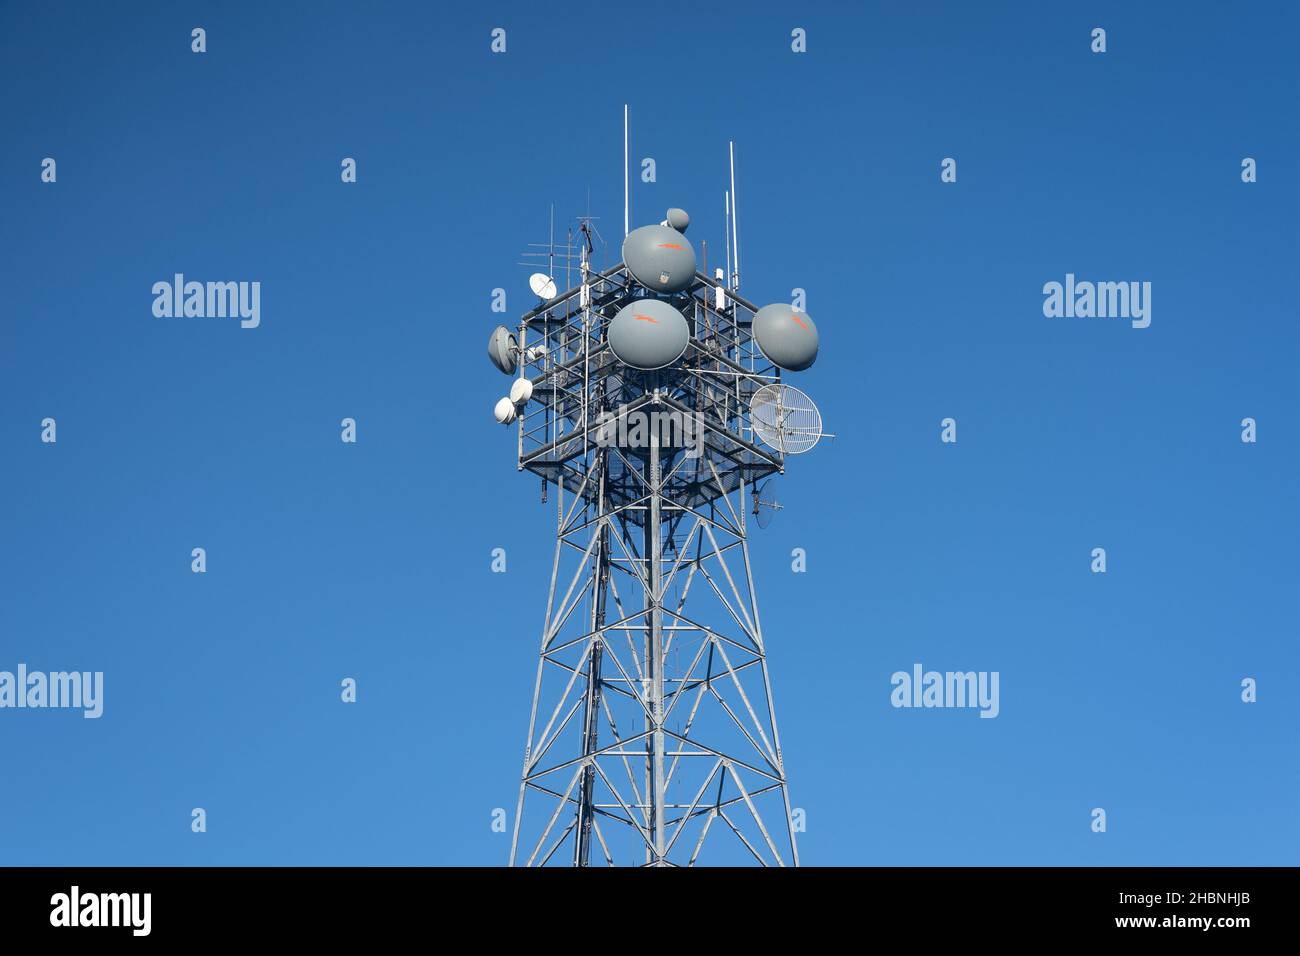 Antenas de microondas fotografías e imágenes de alta resolución - Alamy